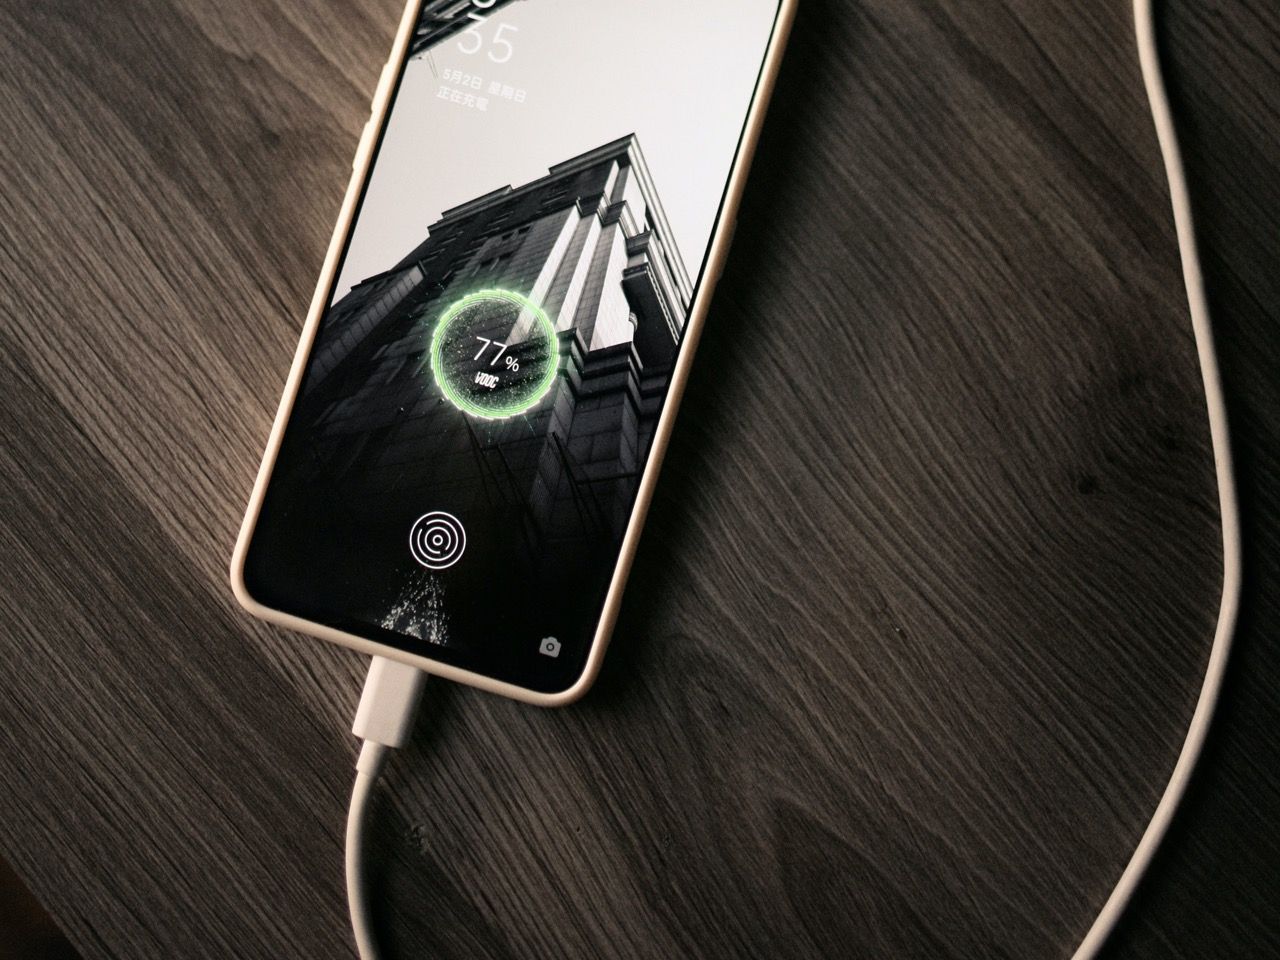 OnePlus Optimized charging